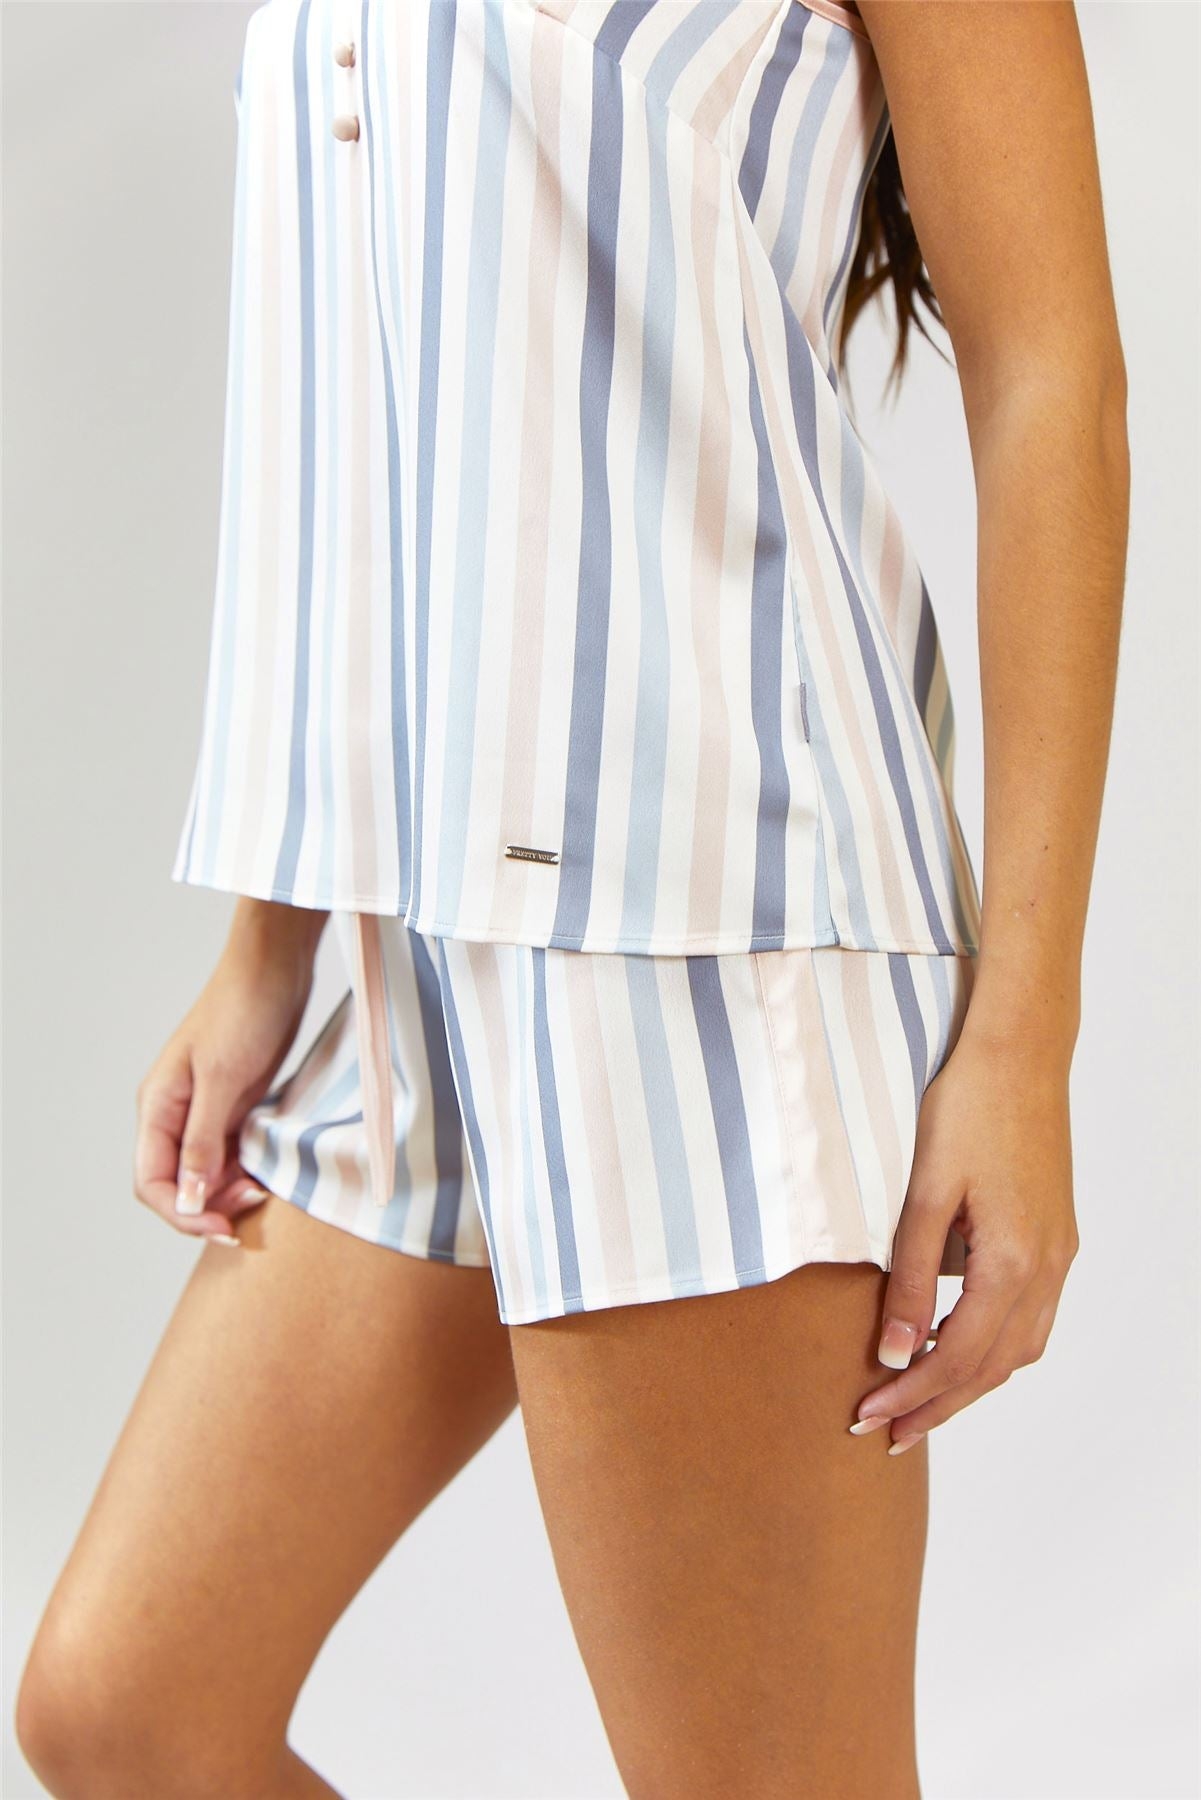 Candy Pyjama Shorts | Women’s Nightwear | Pretty You London UK 12-14 / Multi Stripe